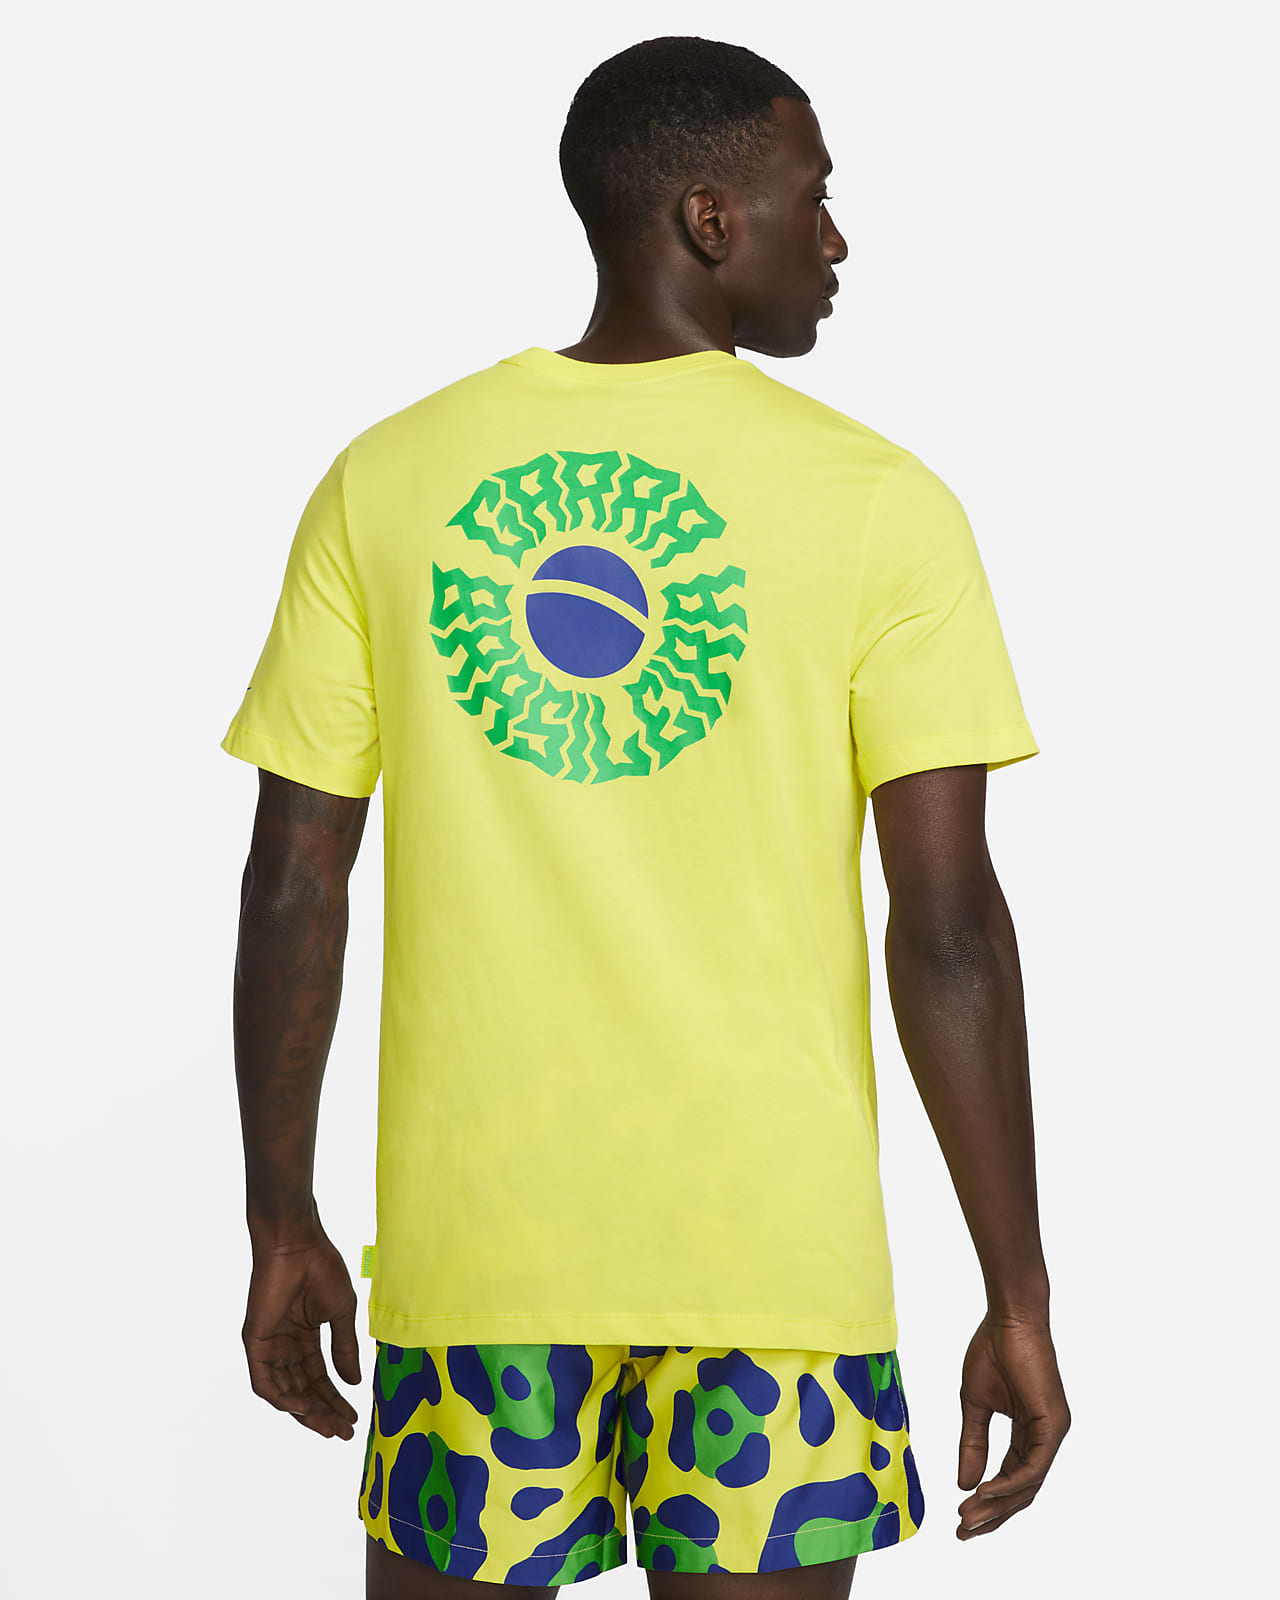 Brazil Men's Voice T-Shirt.